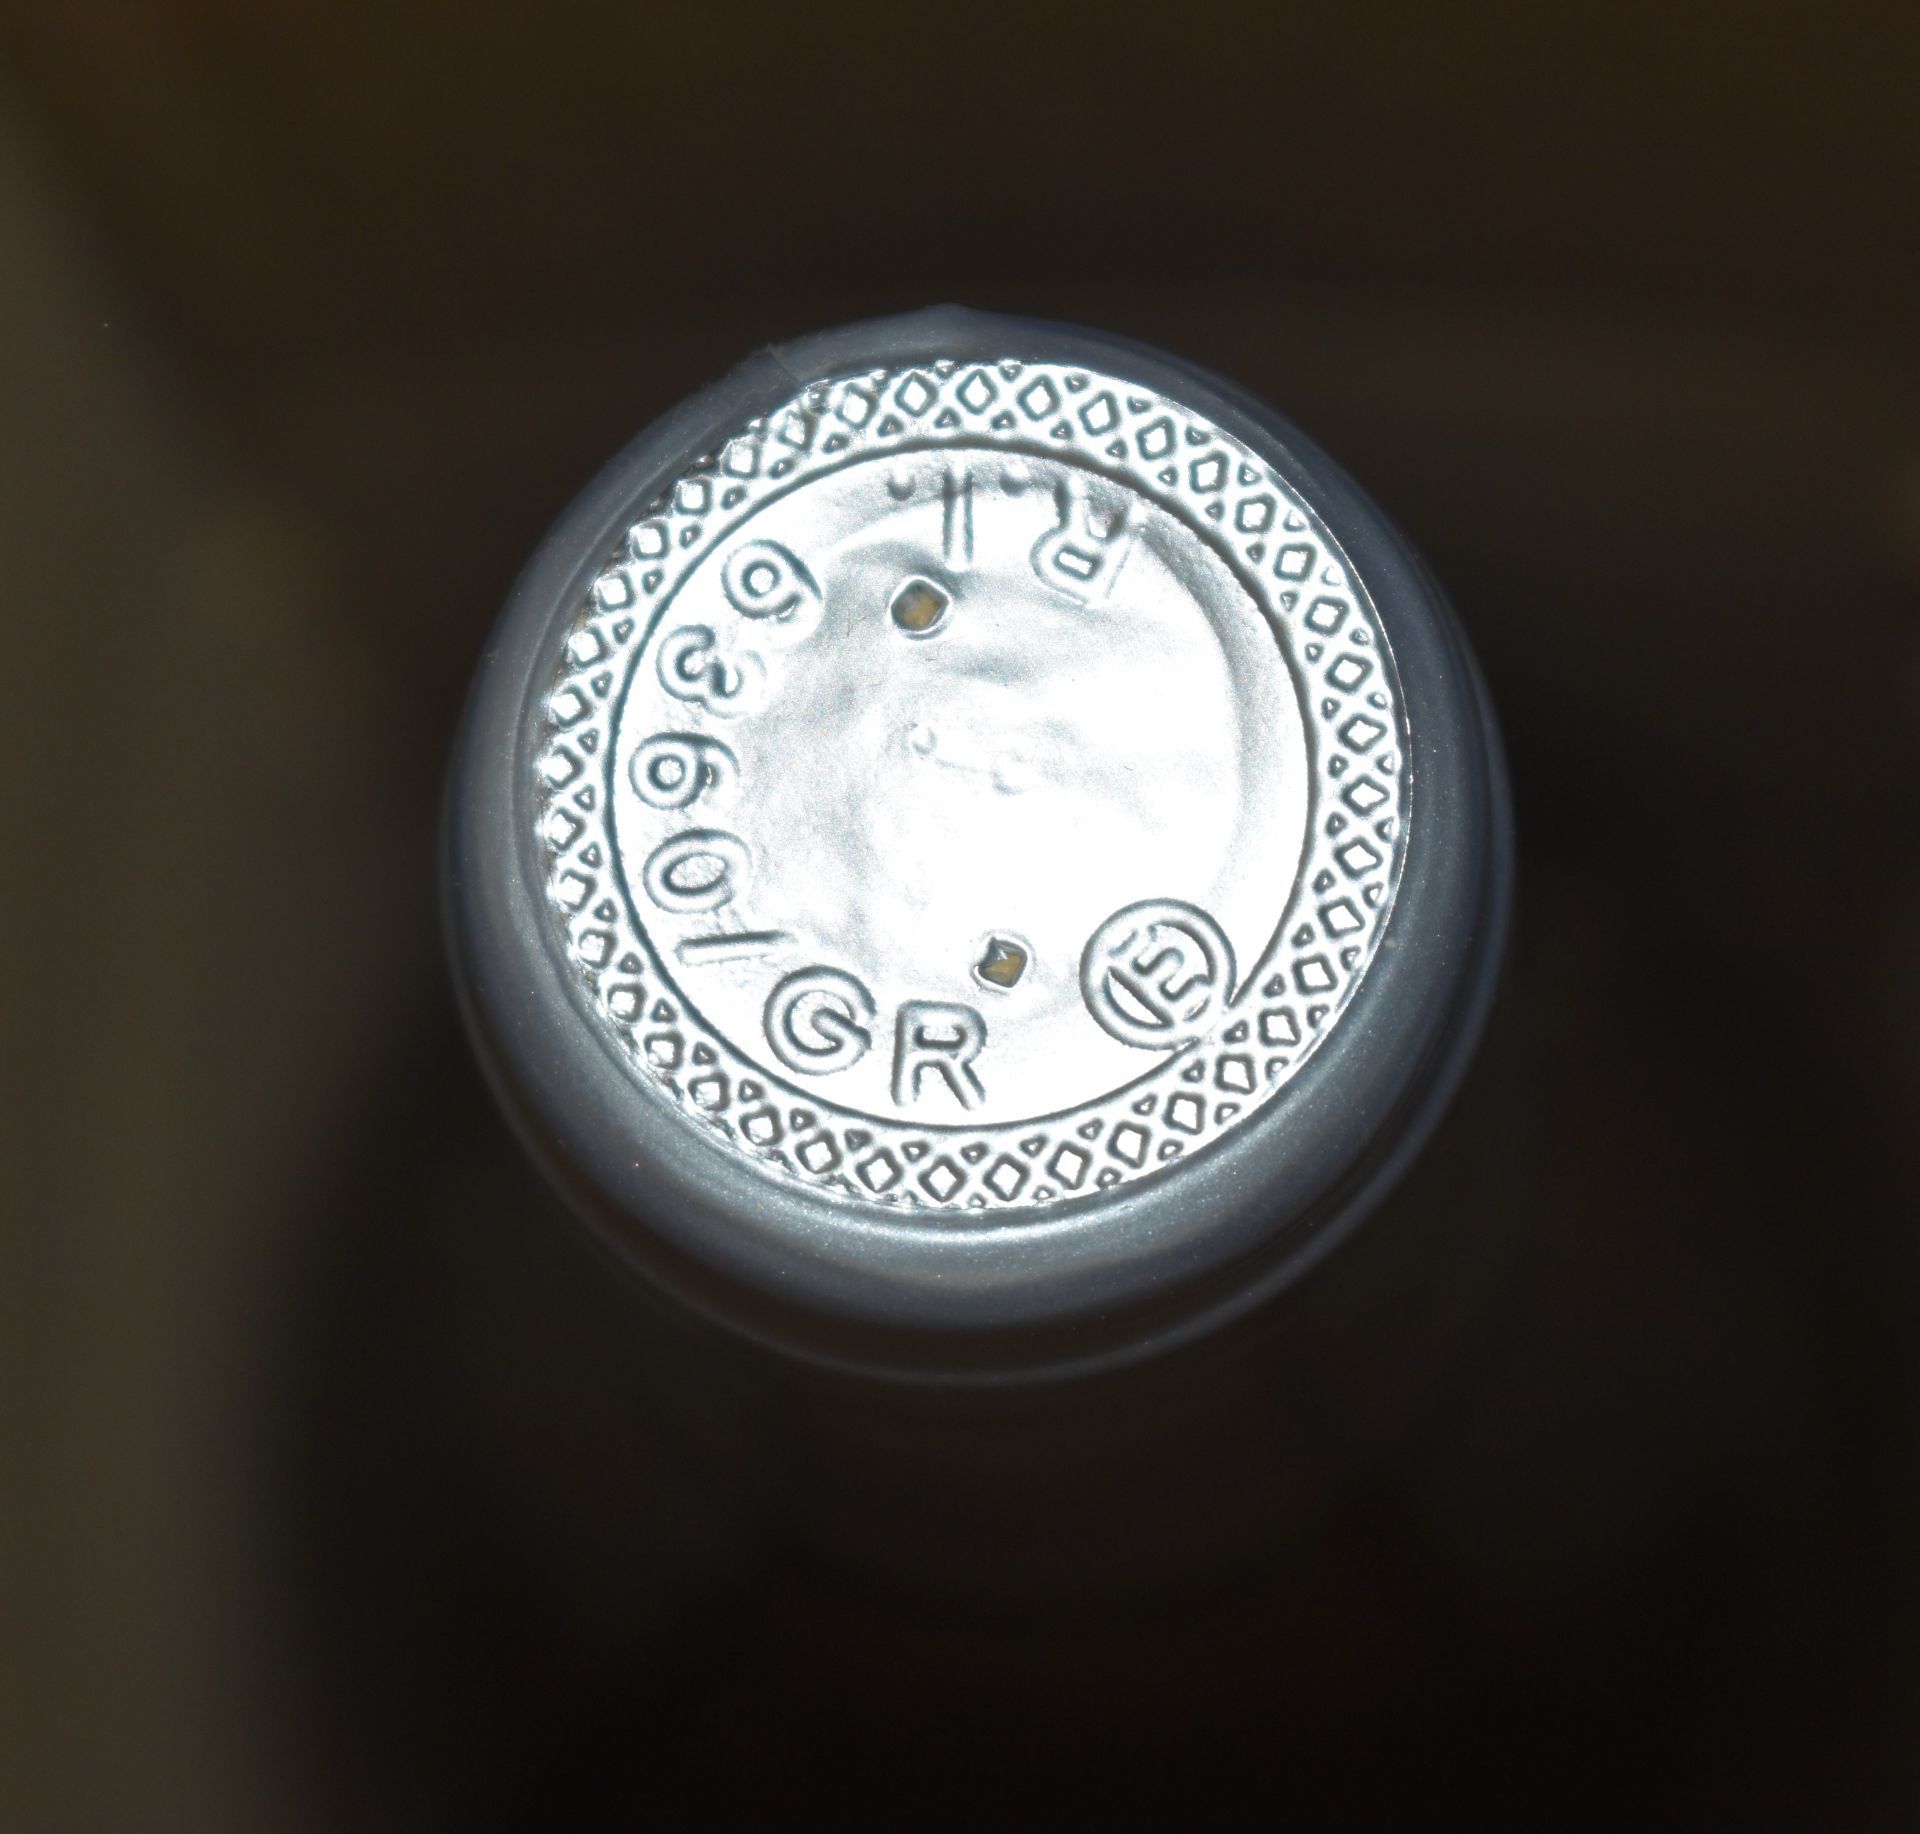 12 x Bottles of Stefano Di Blasi 2019 Vermentino Toscana 13.5% Wine - 750ml Bottles - Drink Until - Image 5 of 7